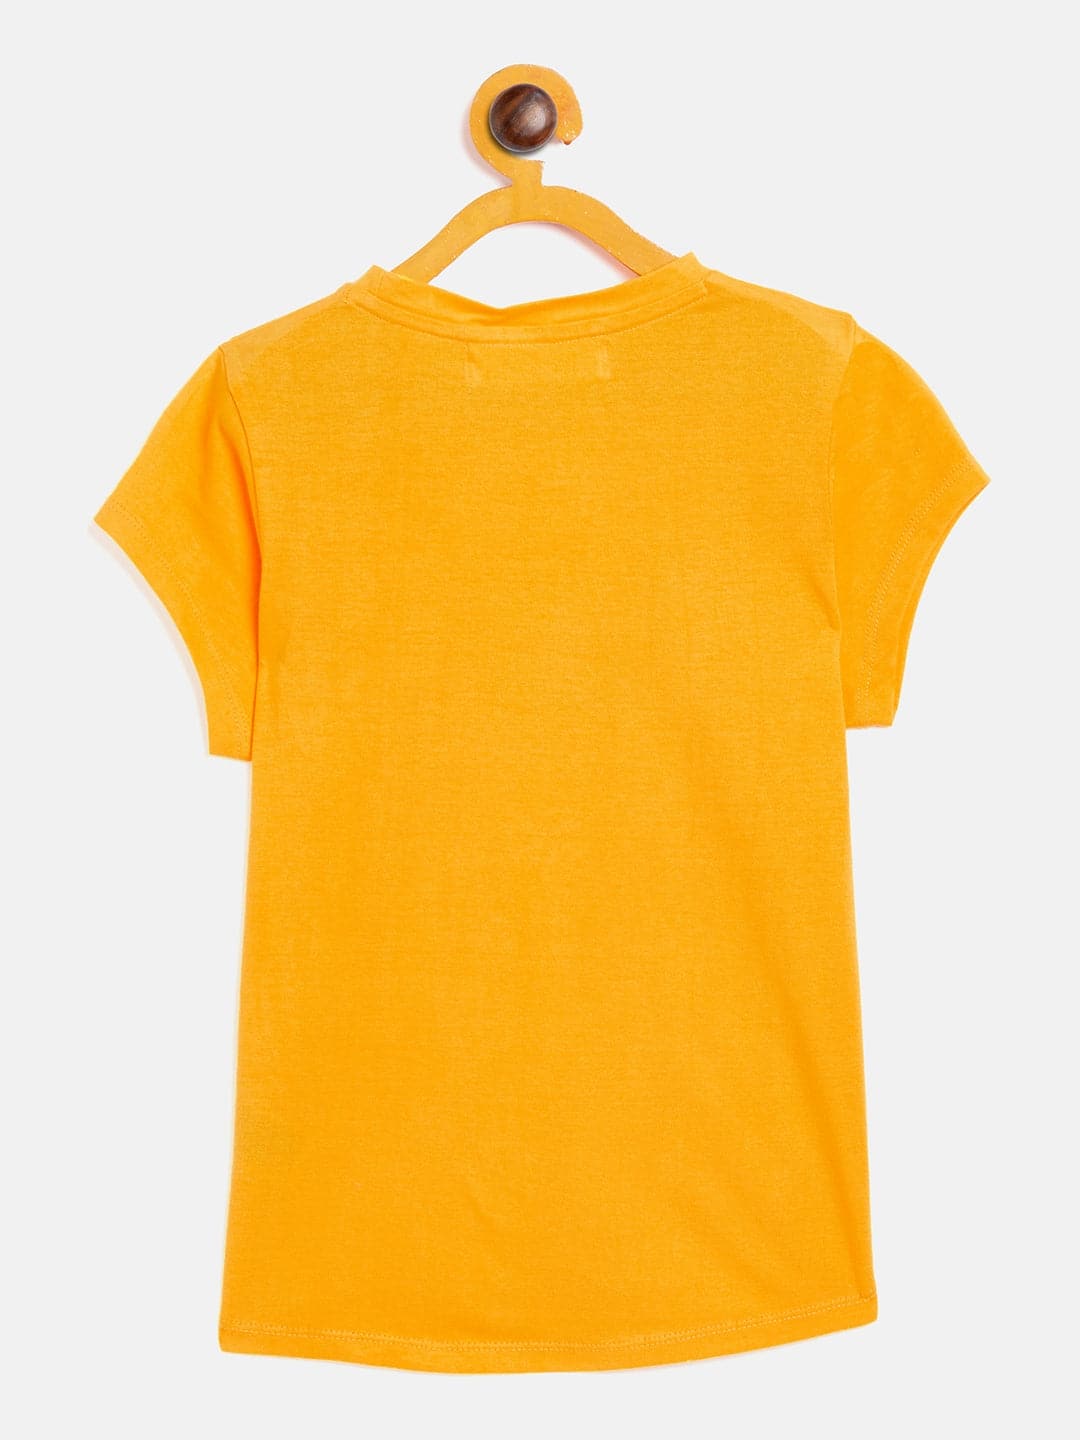 Girl's Mustard I Am Your Hope T-Shirt - LYUSH KIDS